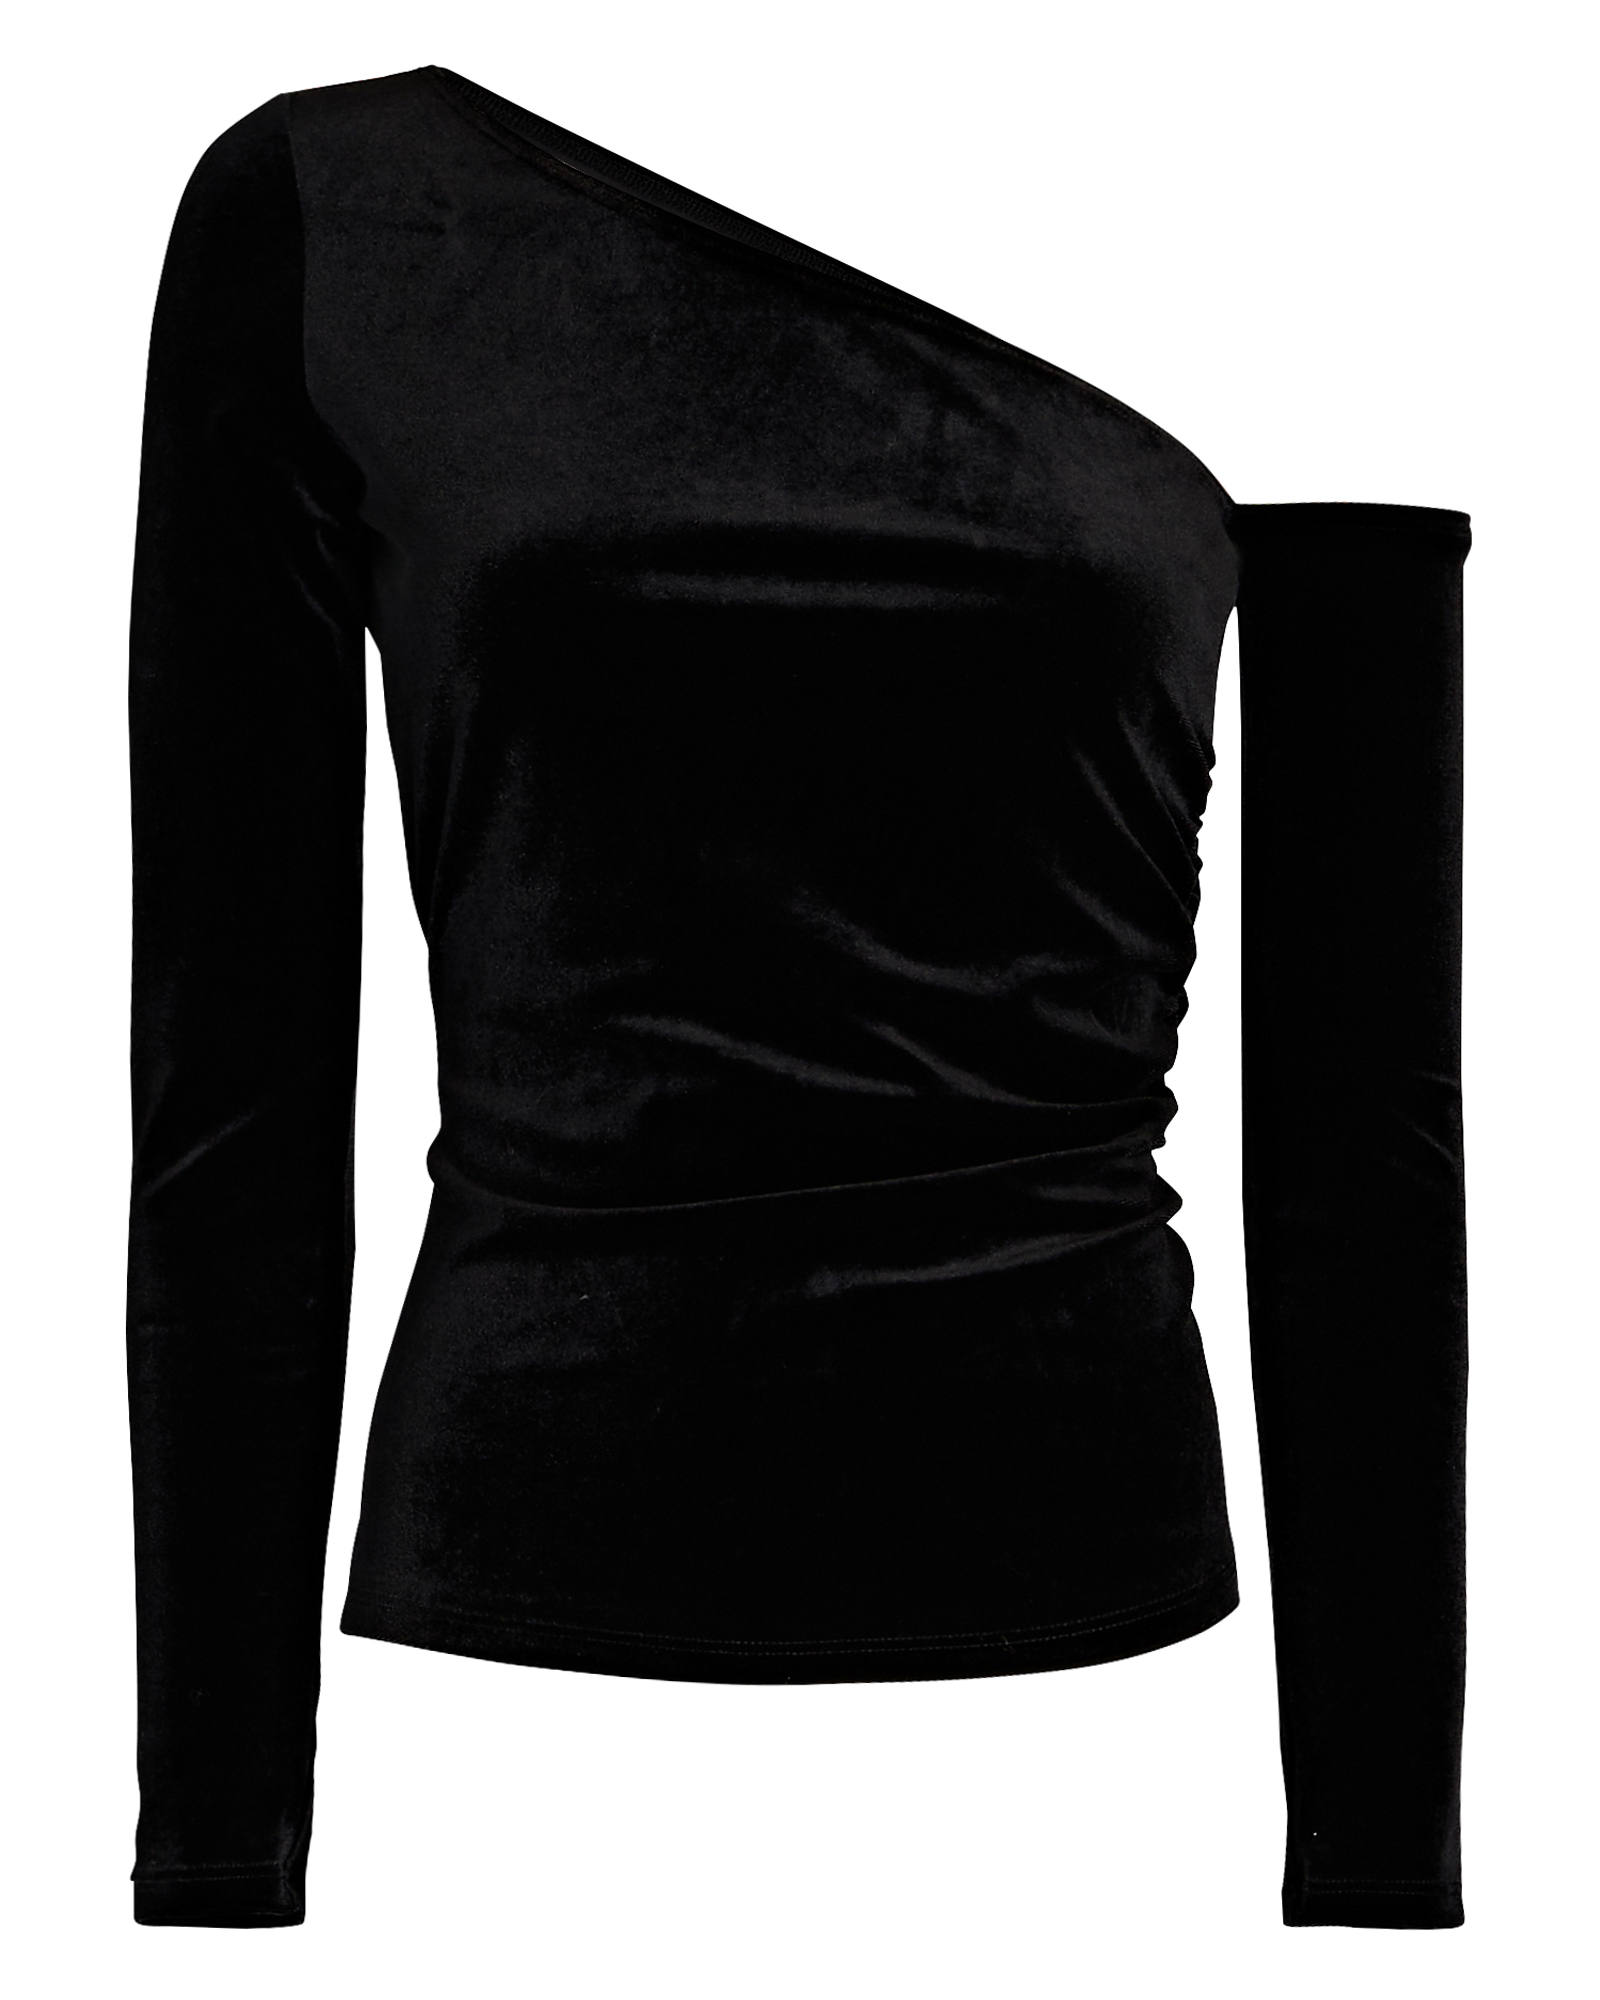 L'Agence Hattie One-Shoulder Velvet TopIn Black | INTERMIX®